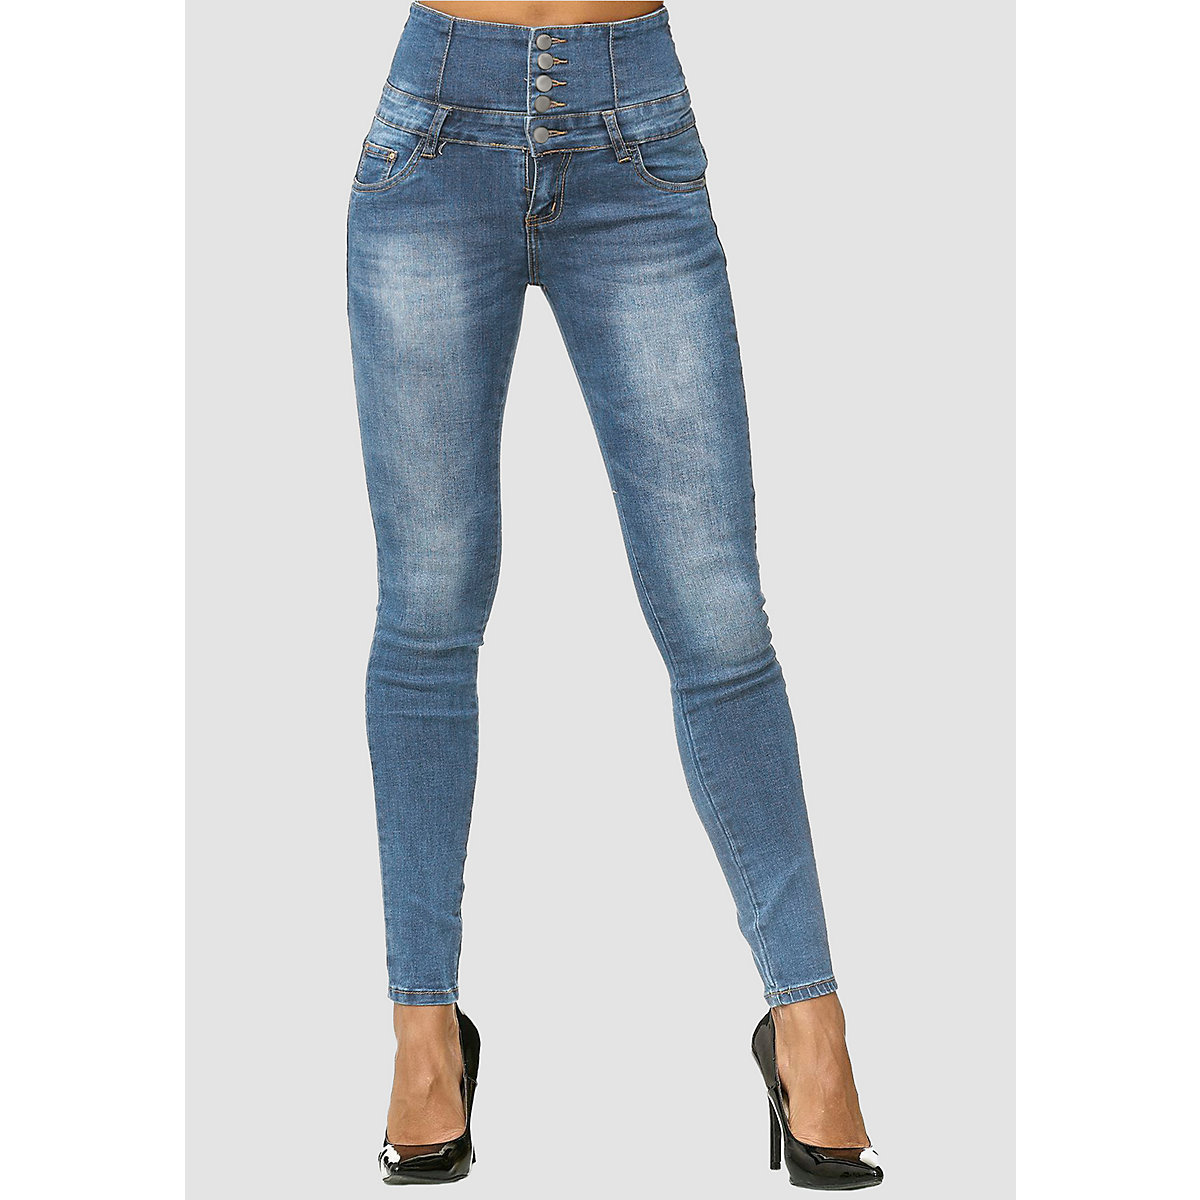 MiSS RJ Skinny Jeans Hose High Waist Demin Stretch Shaping Design blau Modell 2